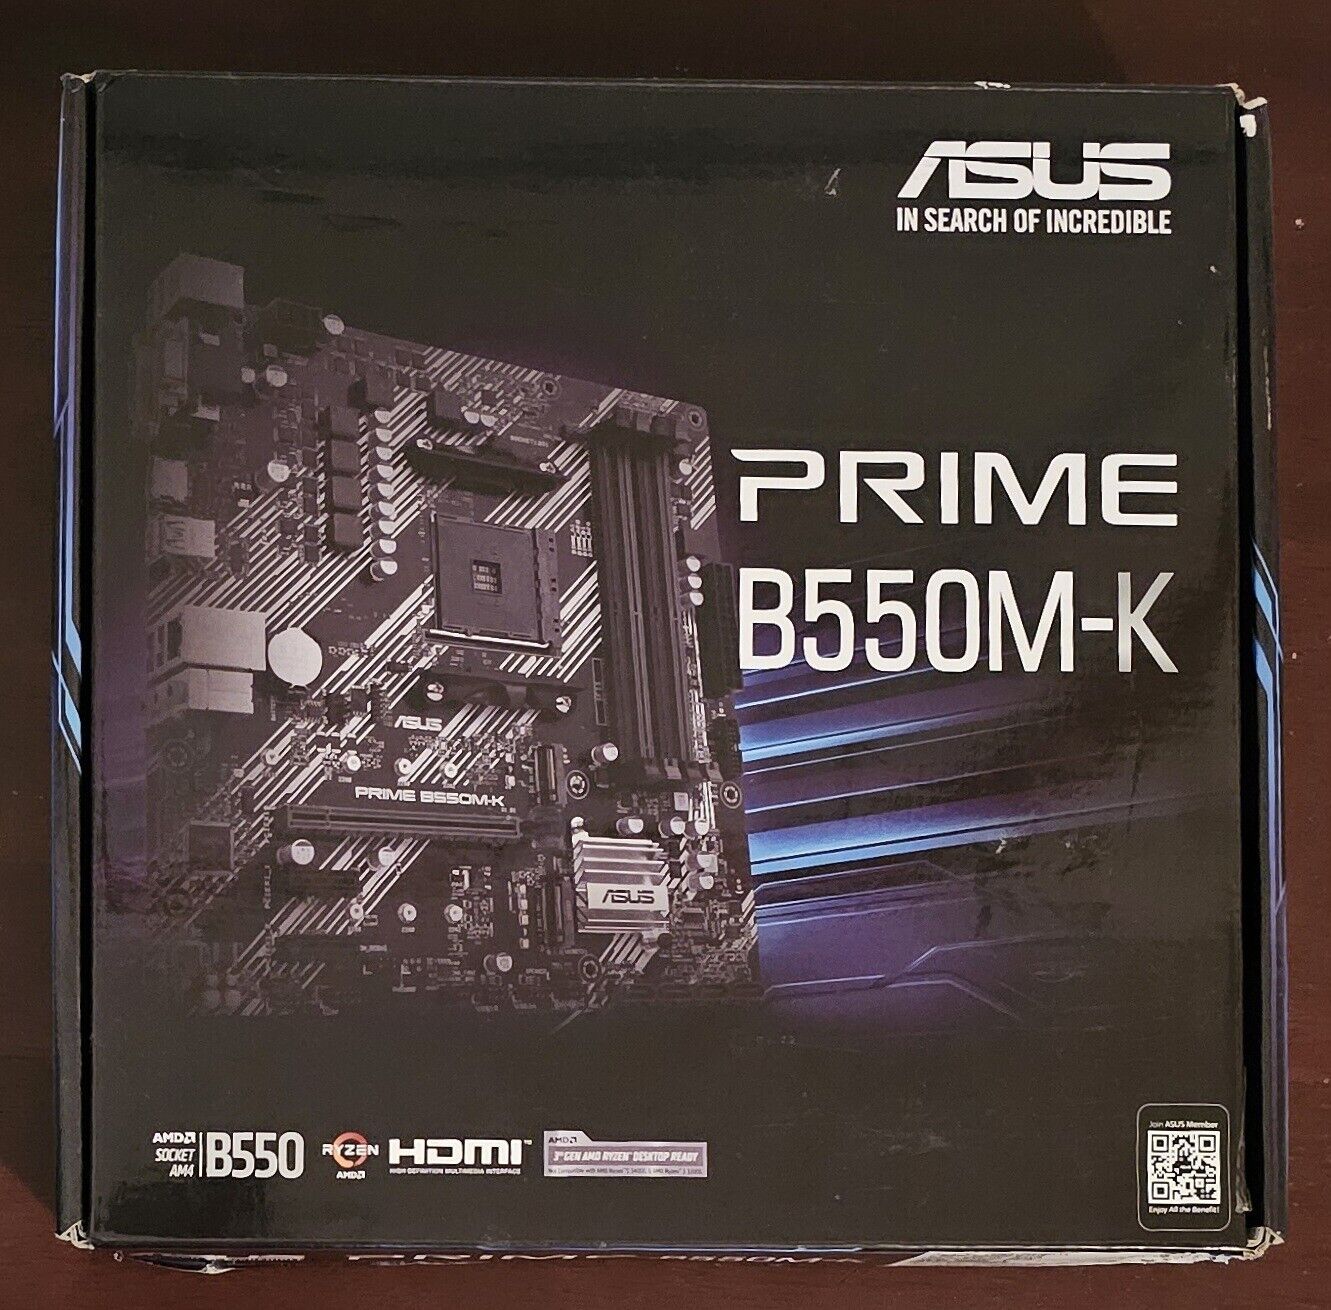 **LATEST BIOS** ASUS PRIME B550M-K AMD Ryzen 5000 AM4 MicroATX Motherboard